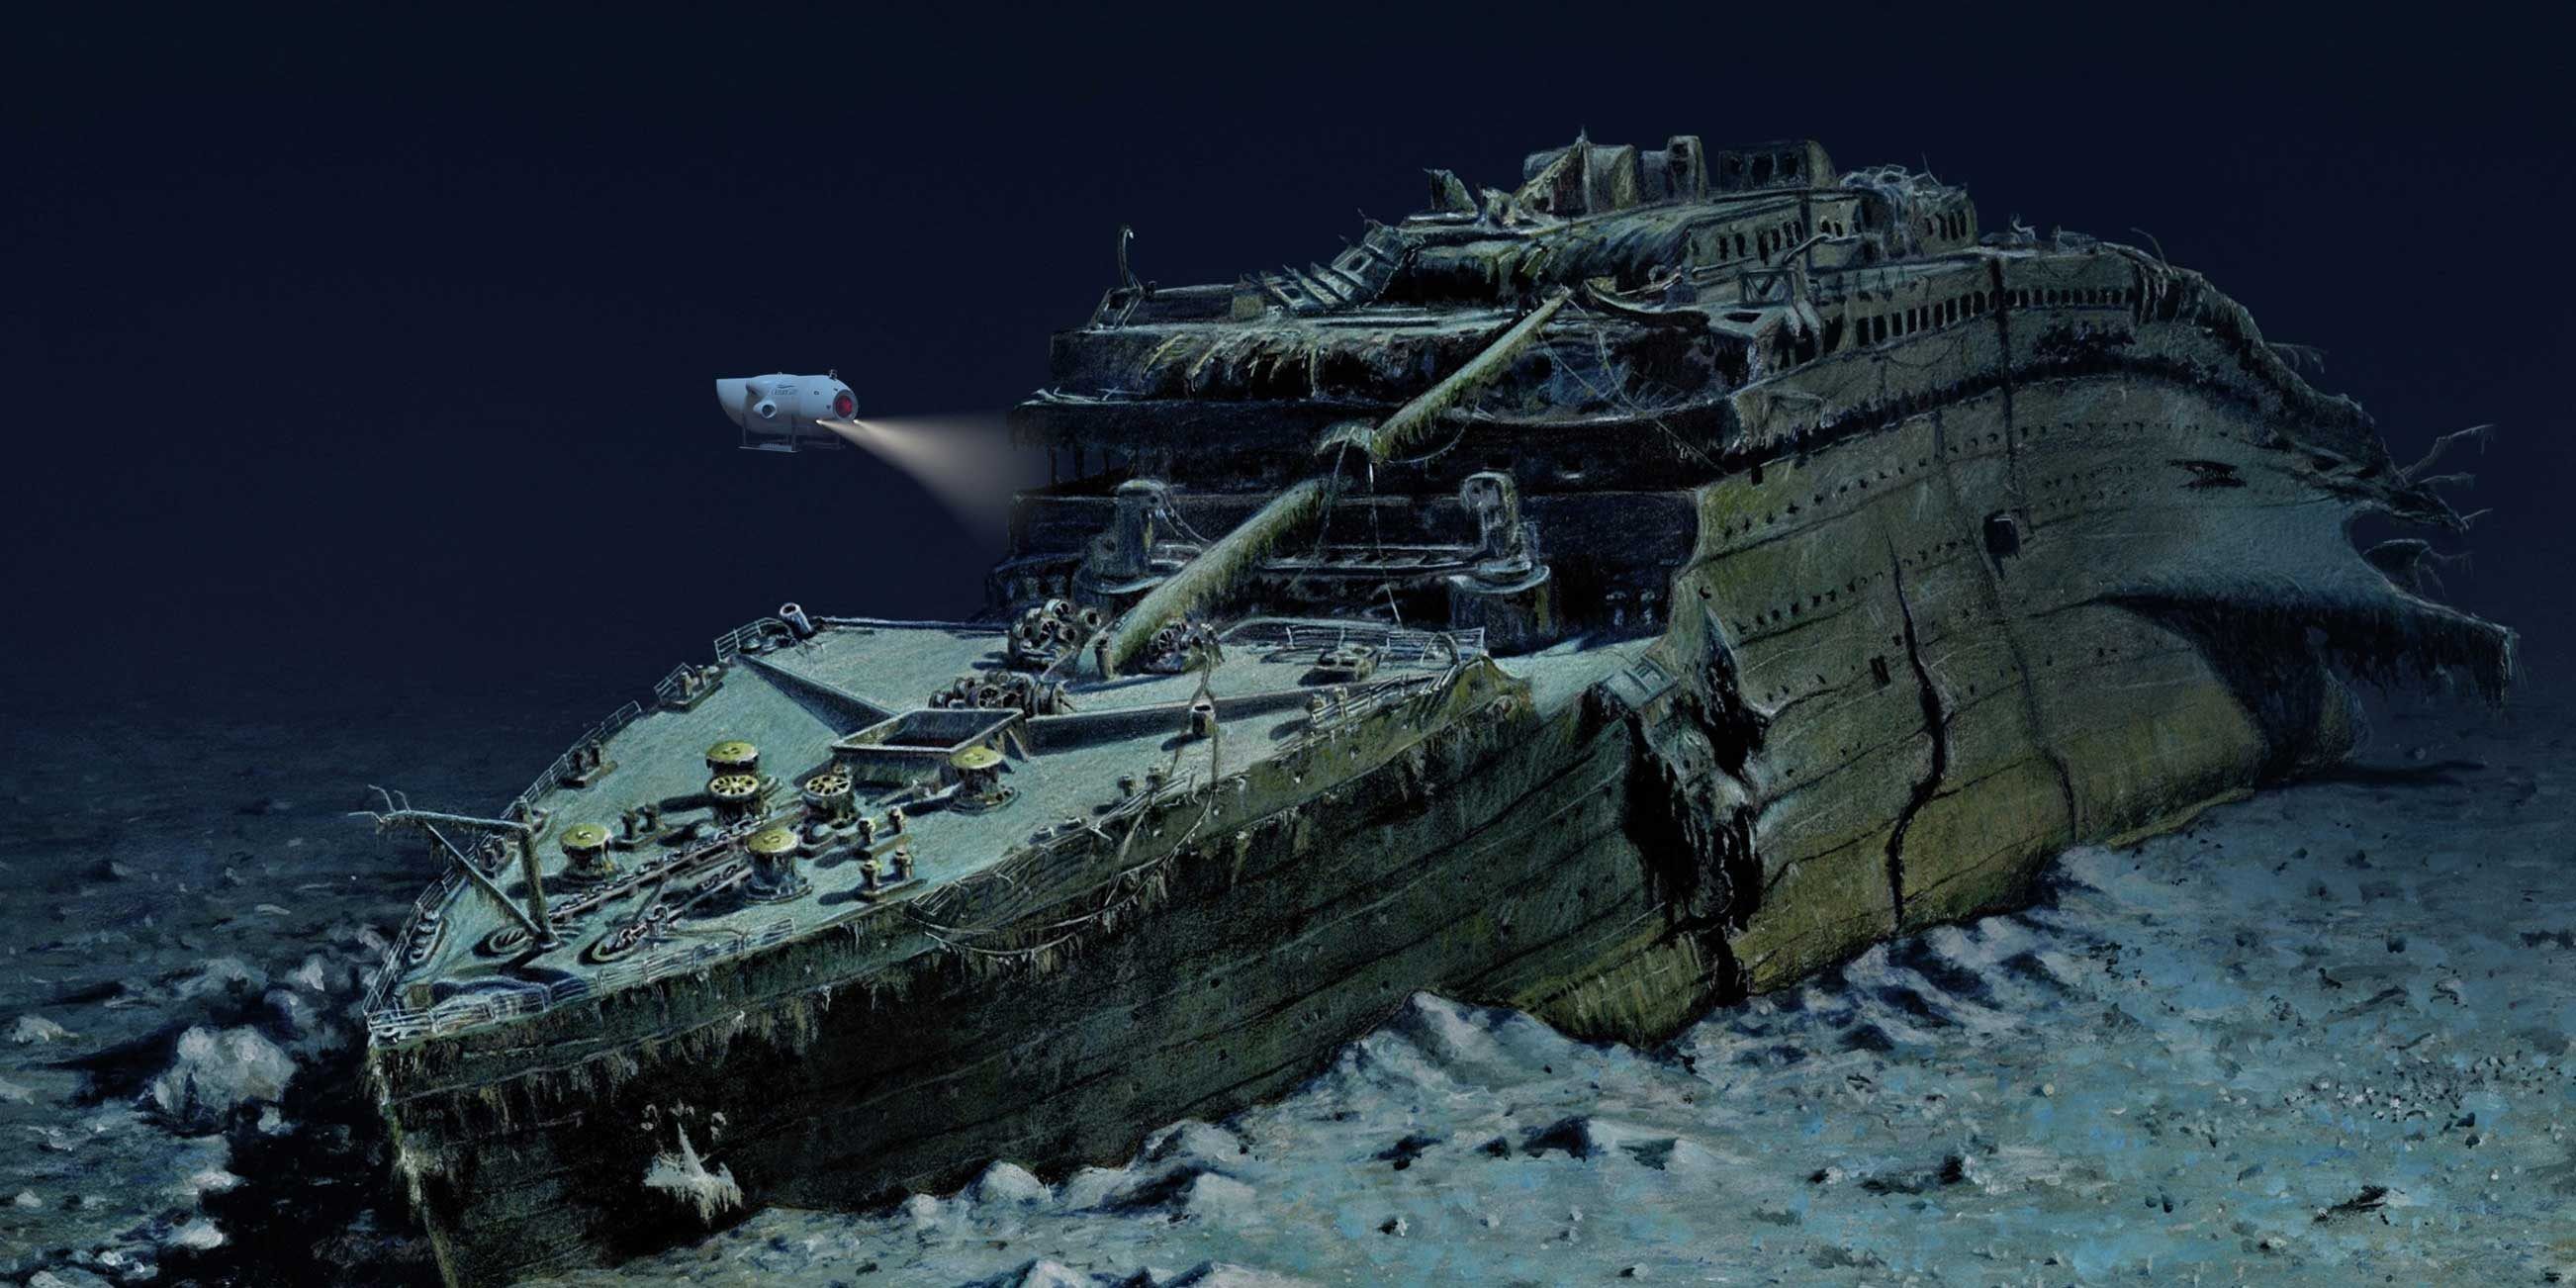 Strange Underwater Image Of The Titanic In 2018